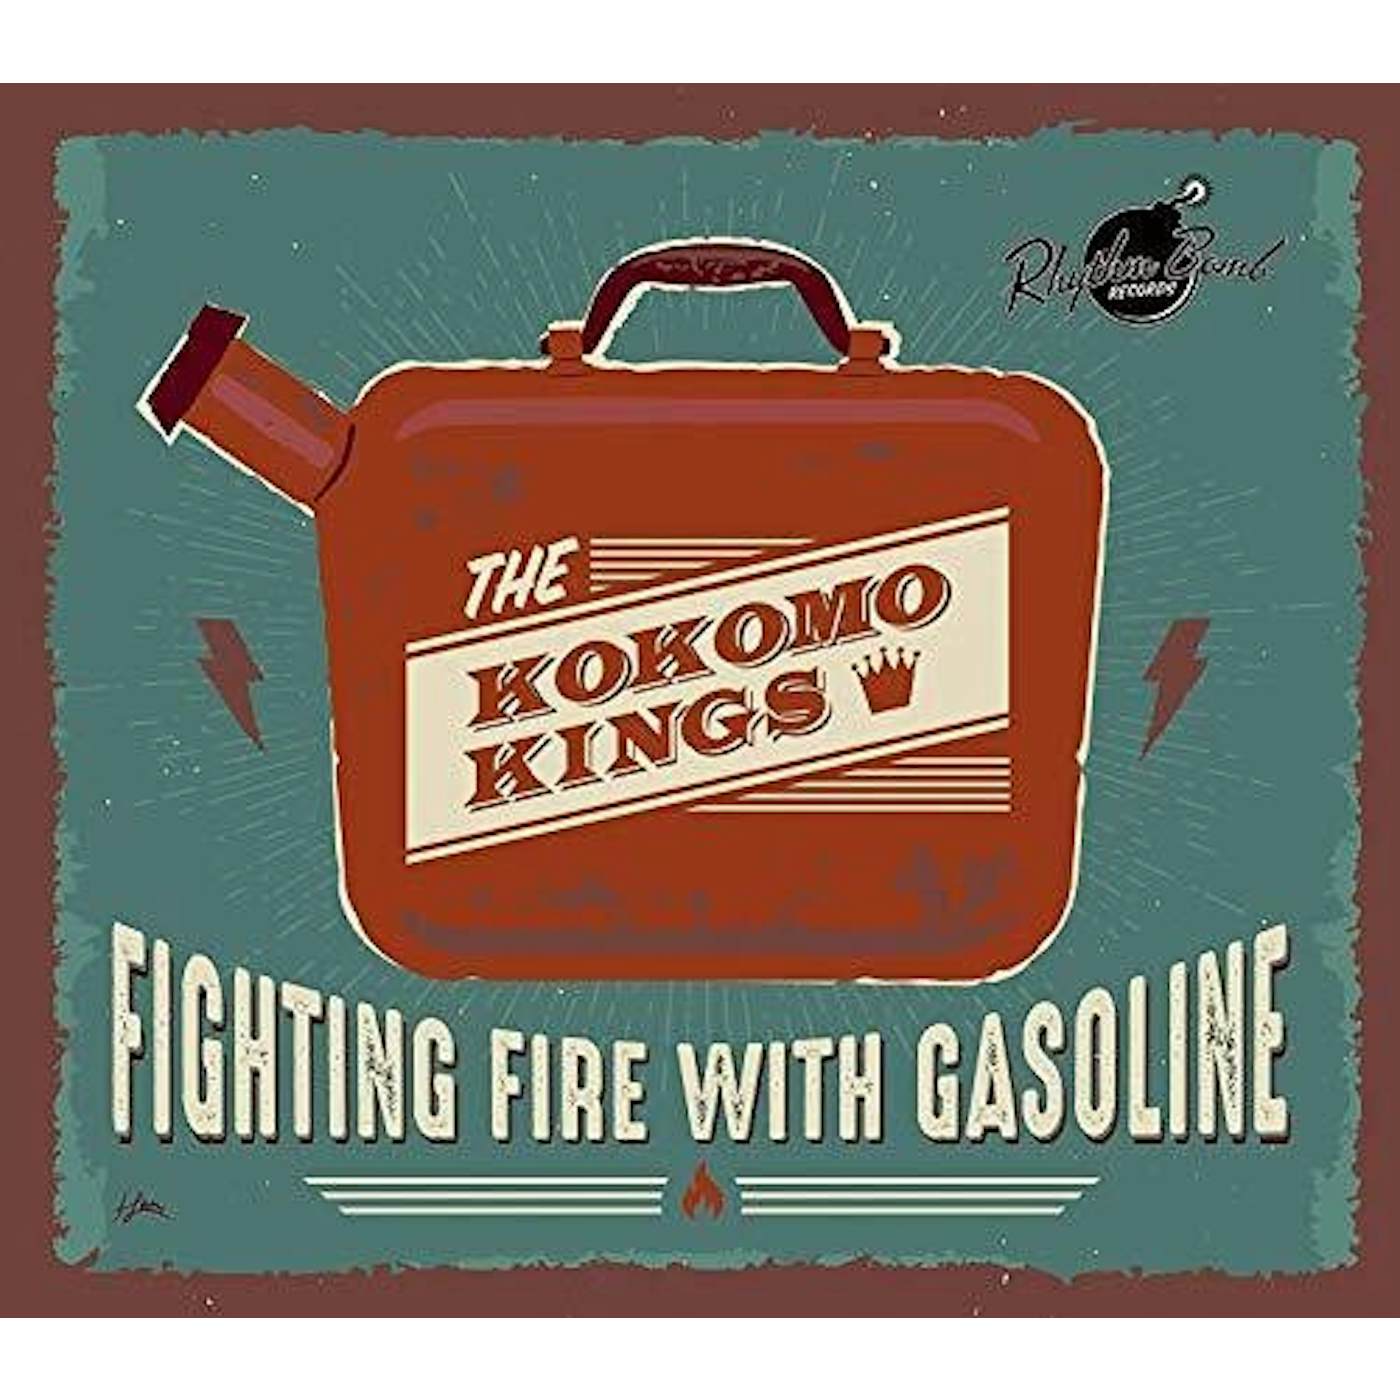 The Kokomo Kings FIGHTING FIRE WITH GASOLINE CD